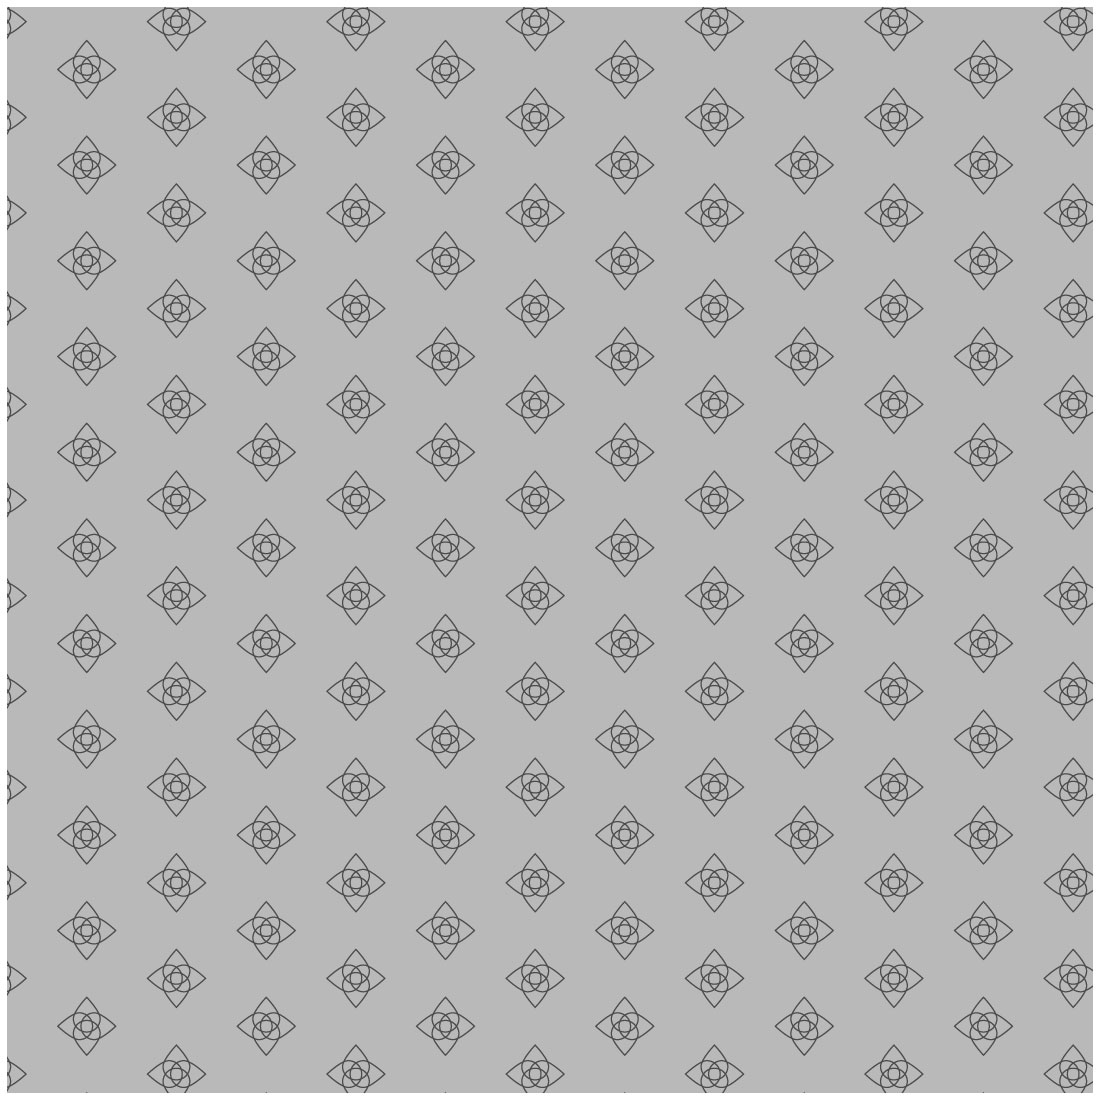 Geometric Minimal Patterns cover image.